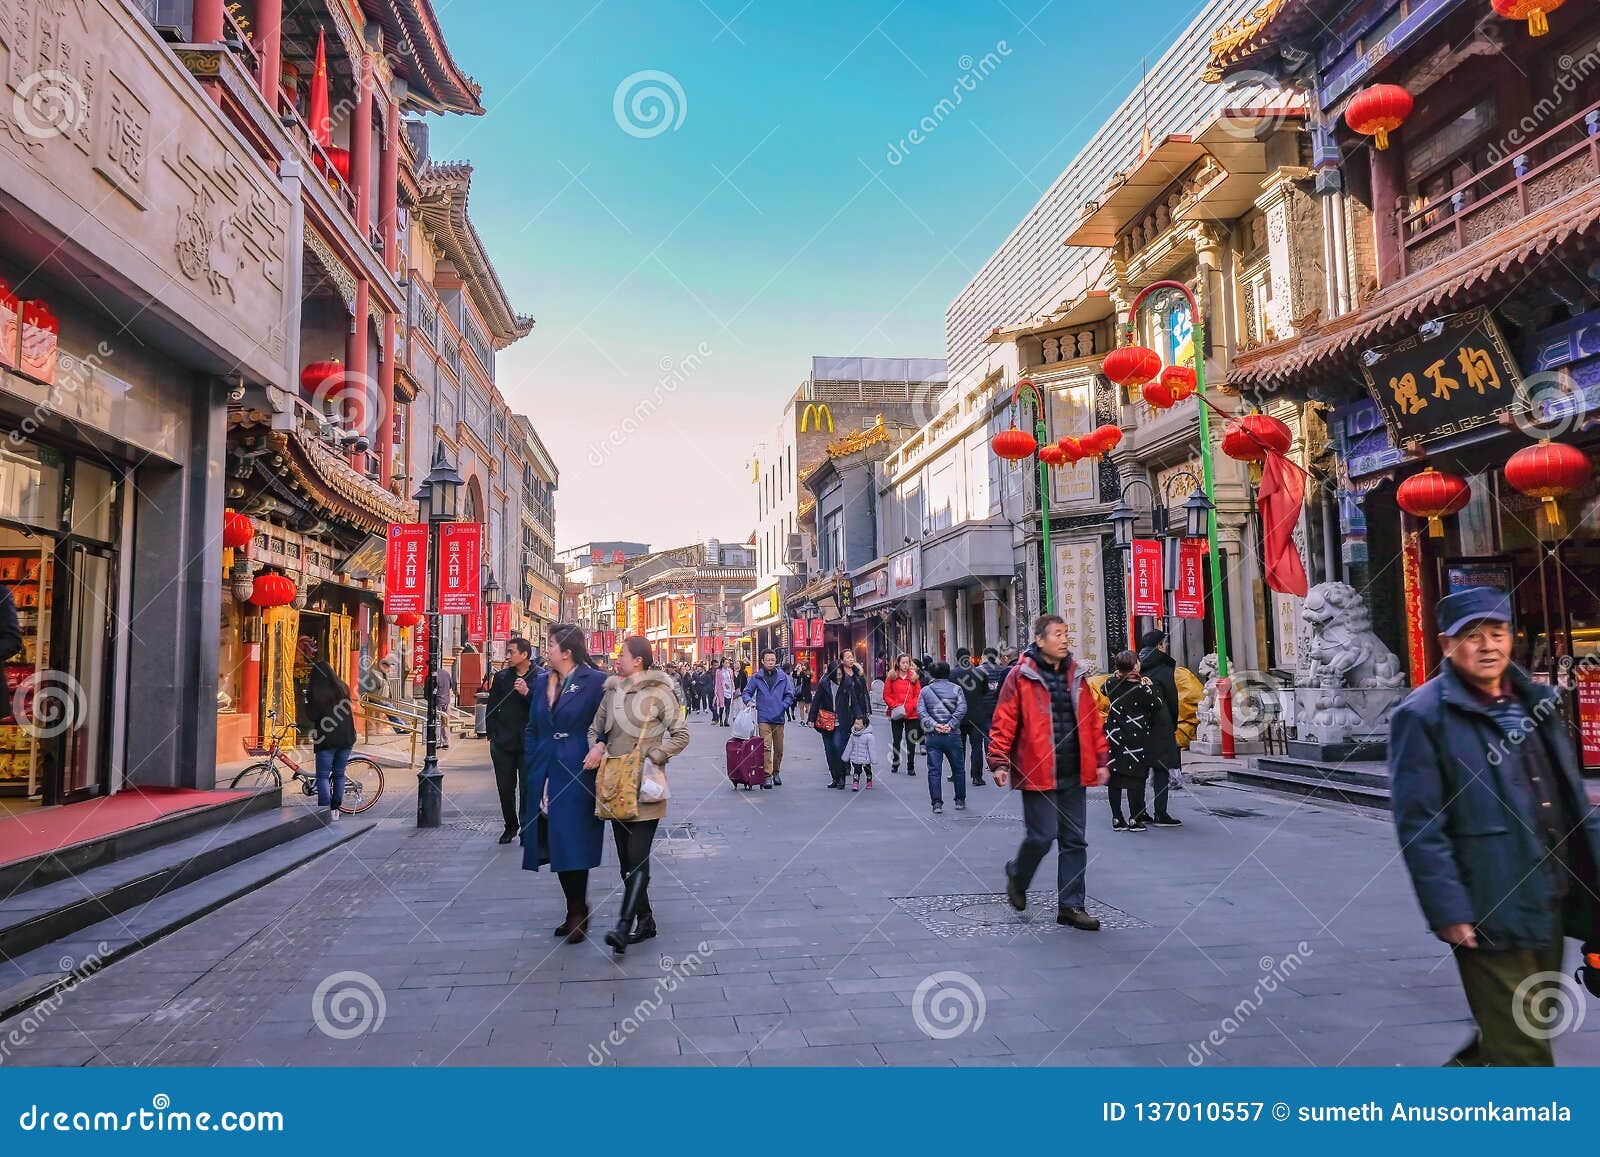 Capital of china